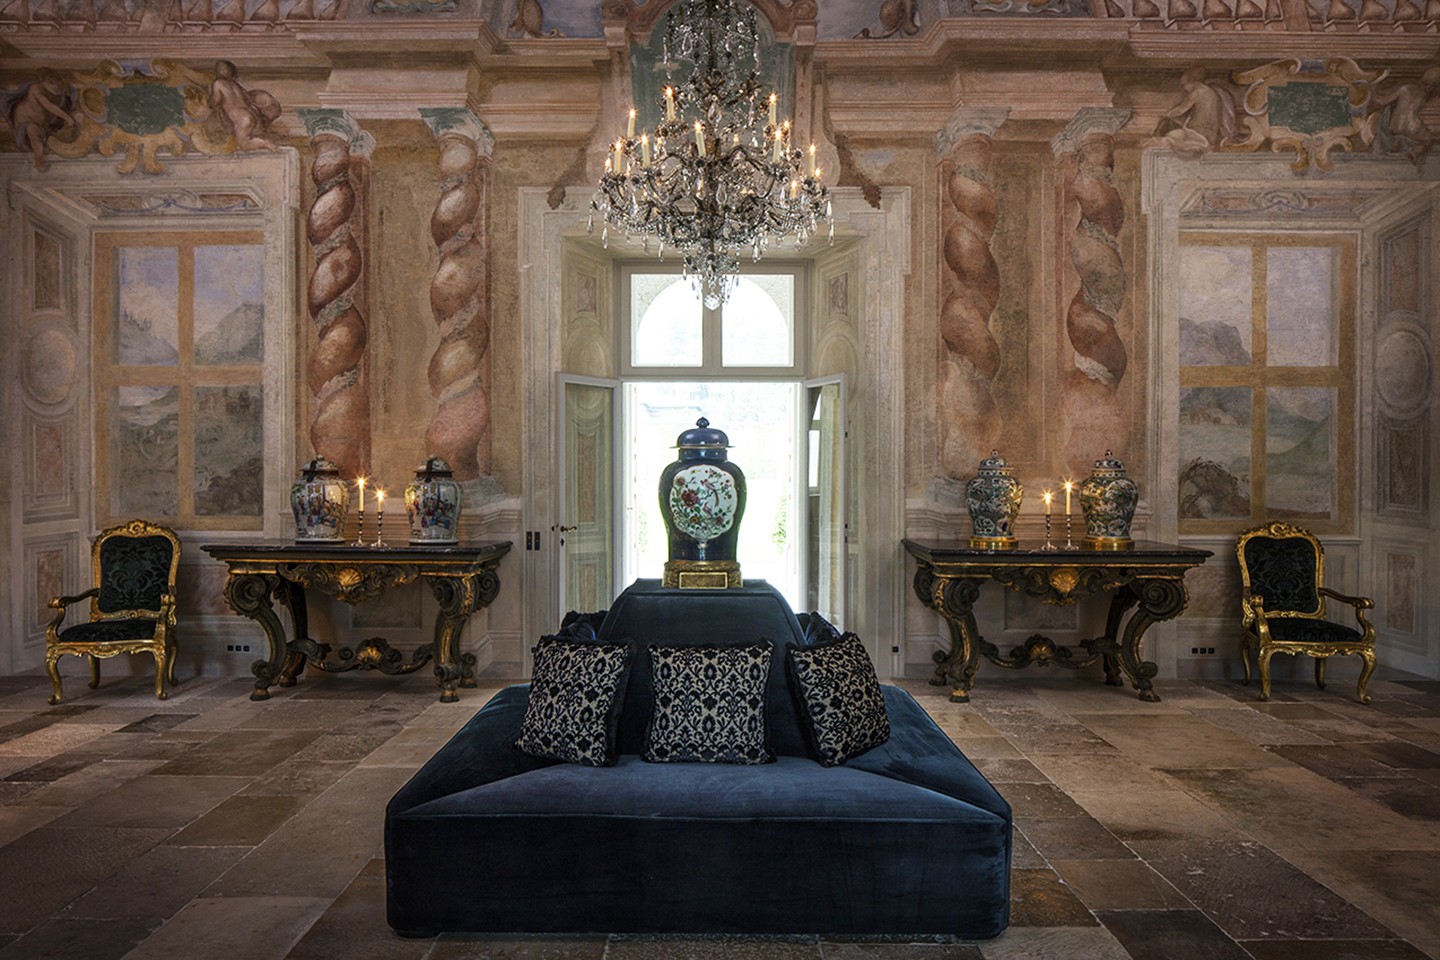 Villa Balbiano luxury property Lake Como Milan Italy exclusive wedding event venue grand floor salon ceremony best Durini classic interiors 1